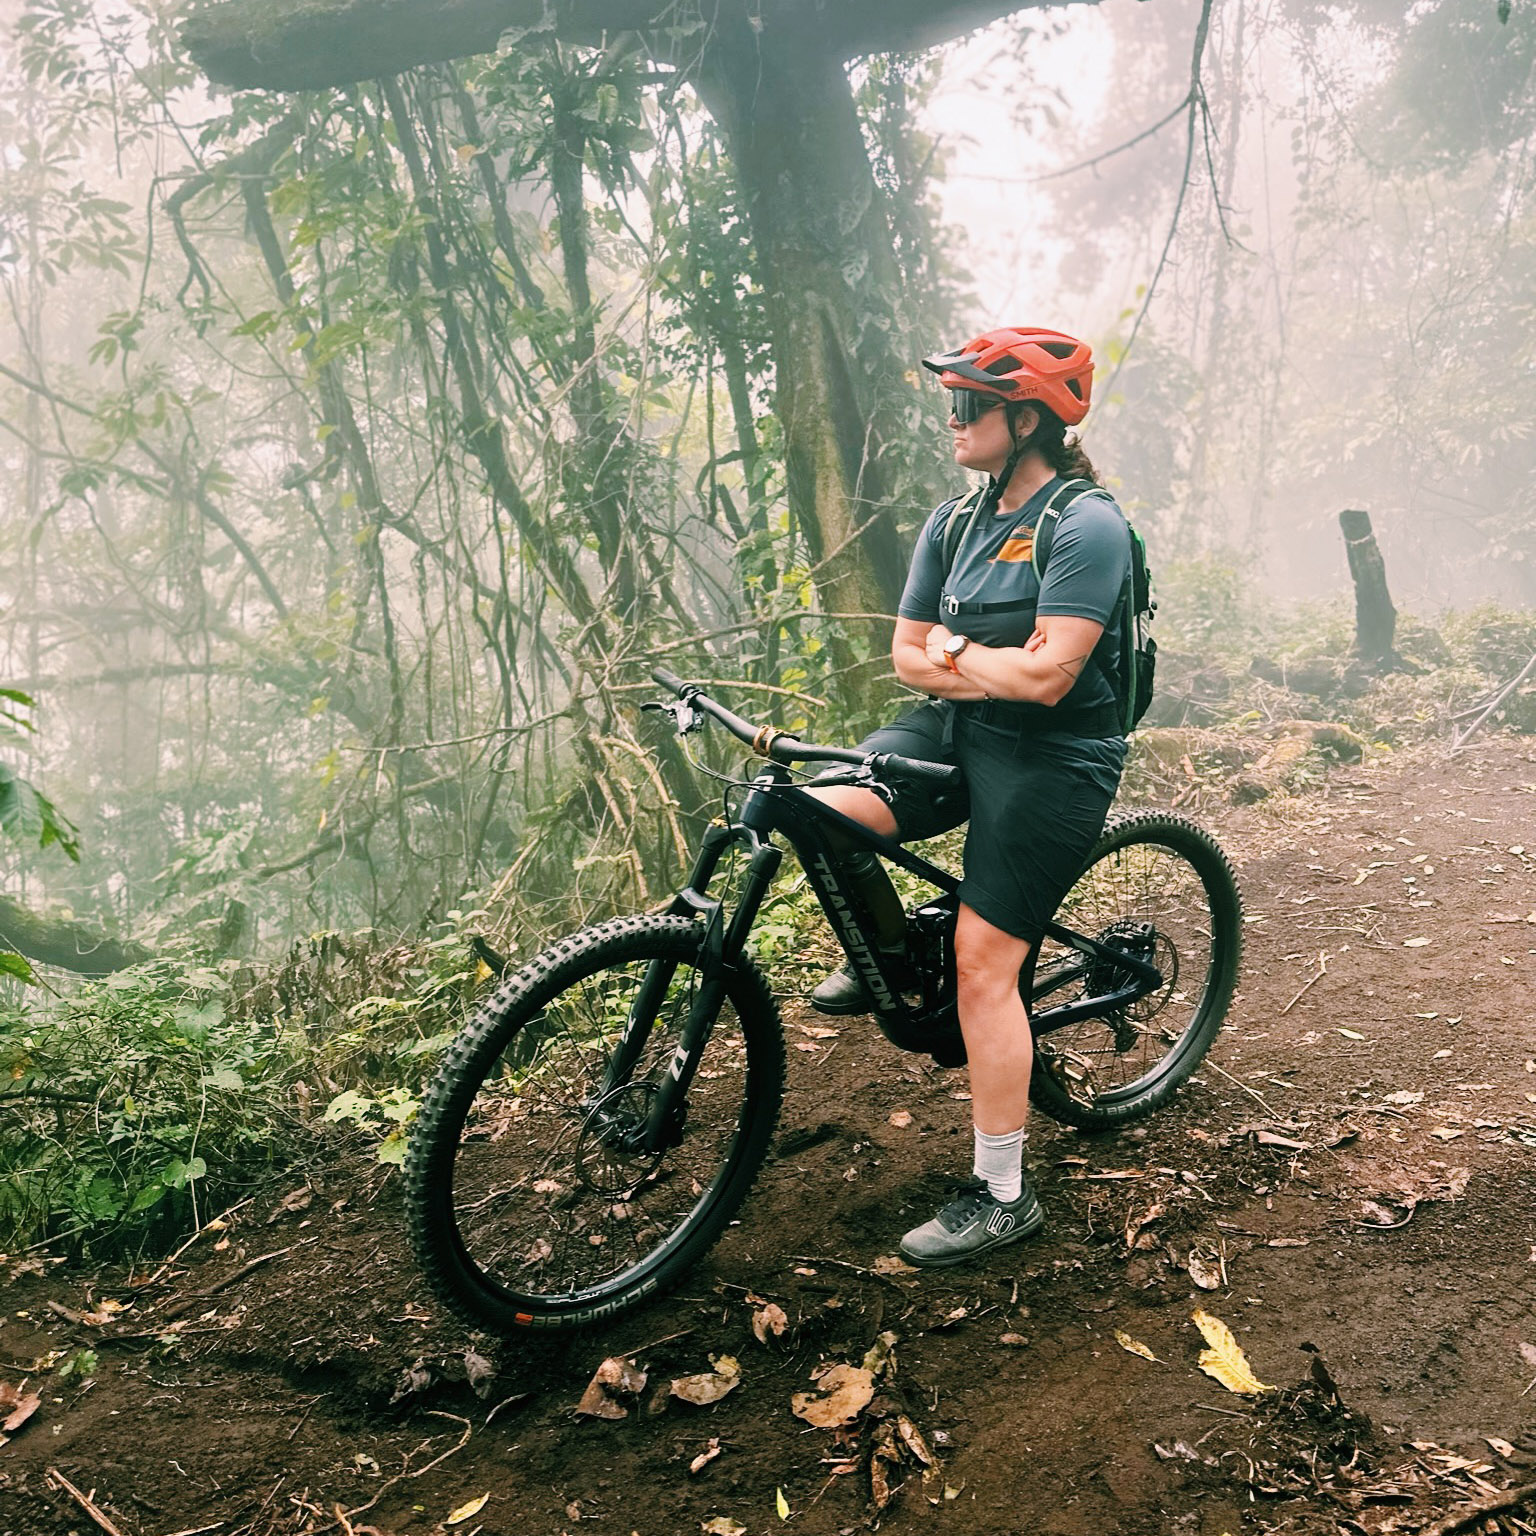 Emma mountain biking in the jungles of Guatemala.